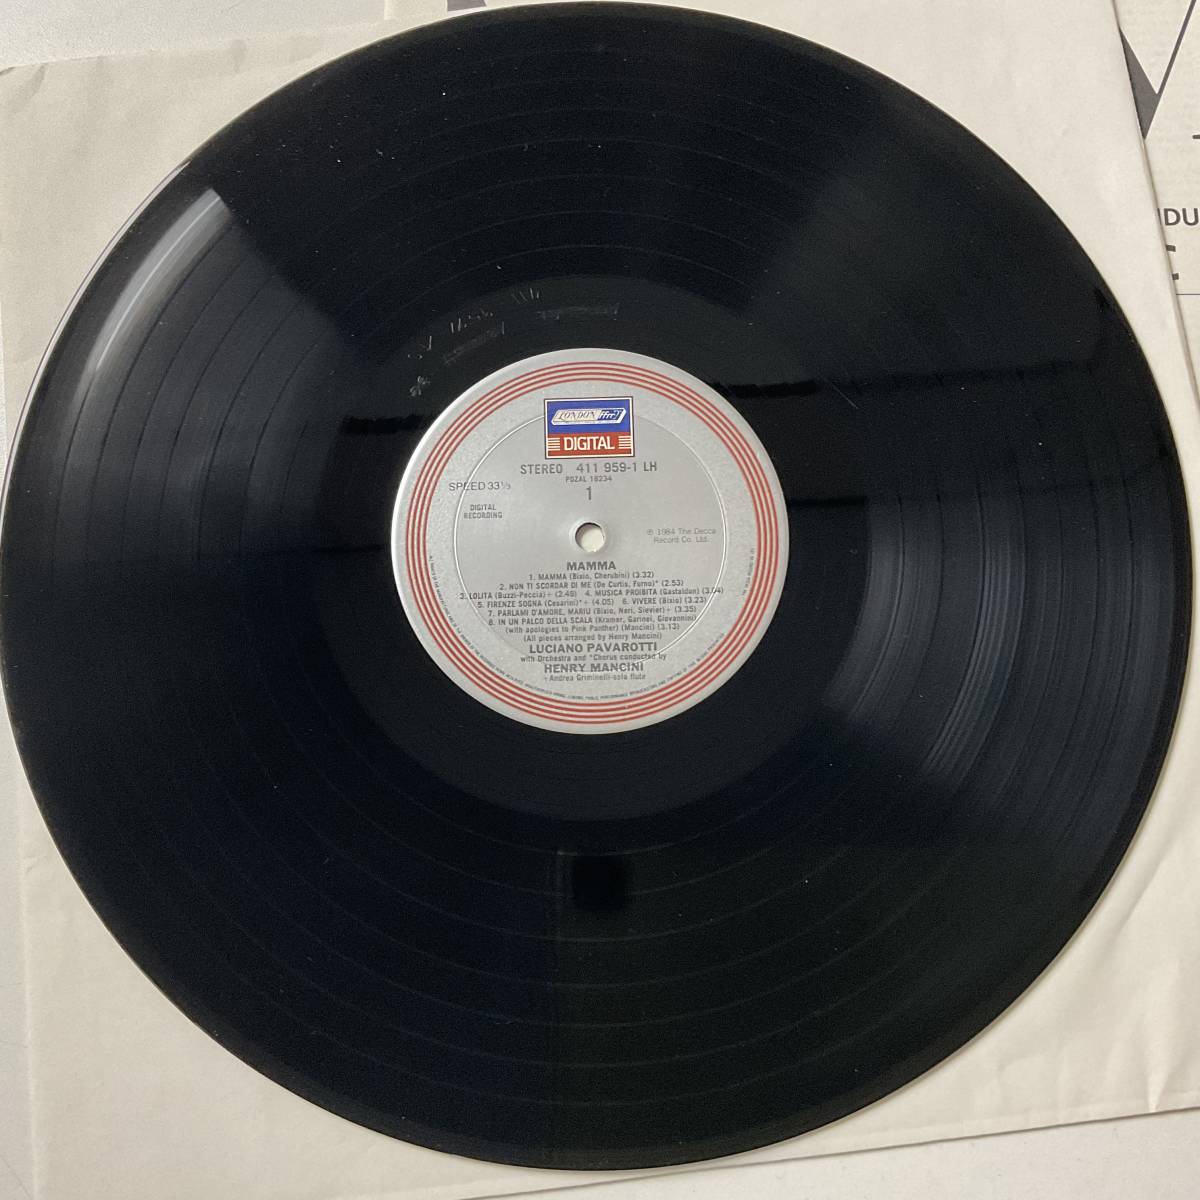 *LP レコード Luciano Pavarotti / Henry Mancini Mamma UK 1984 ORIGINAL Decca 4119591 美盤 LICCA*RECORDS 425 何枚でも同送料_画像5